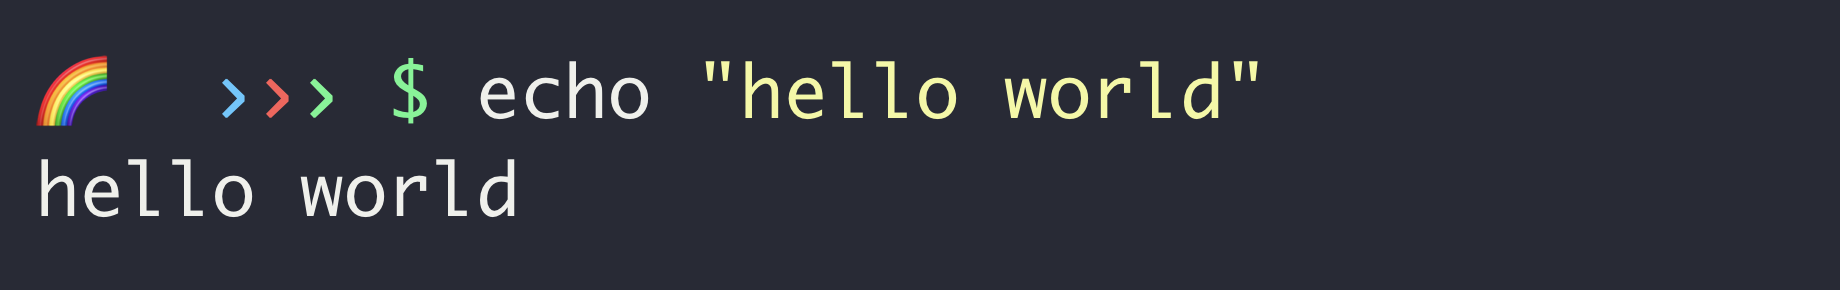 Terminal command: $ echo "hello world"